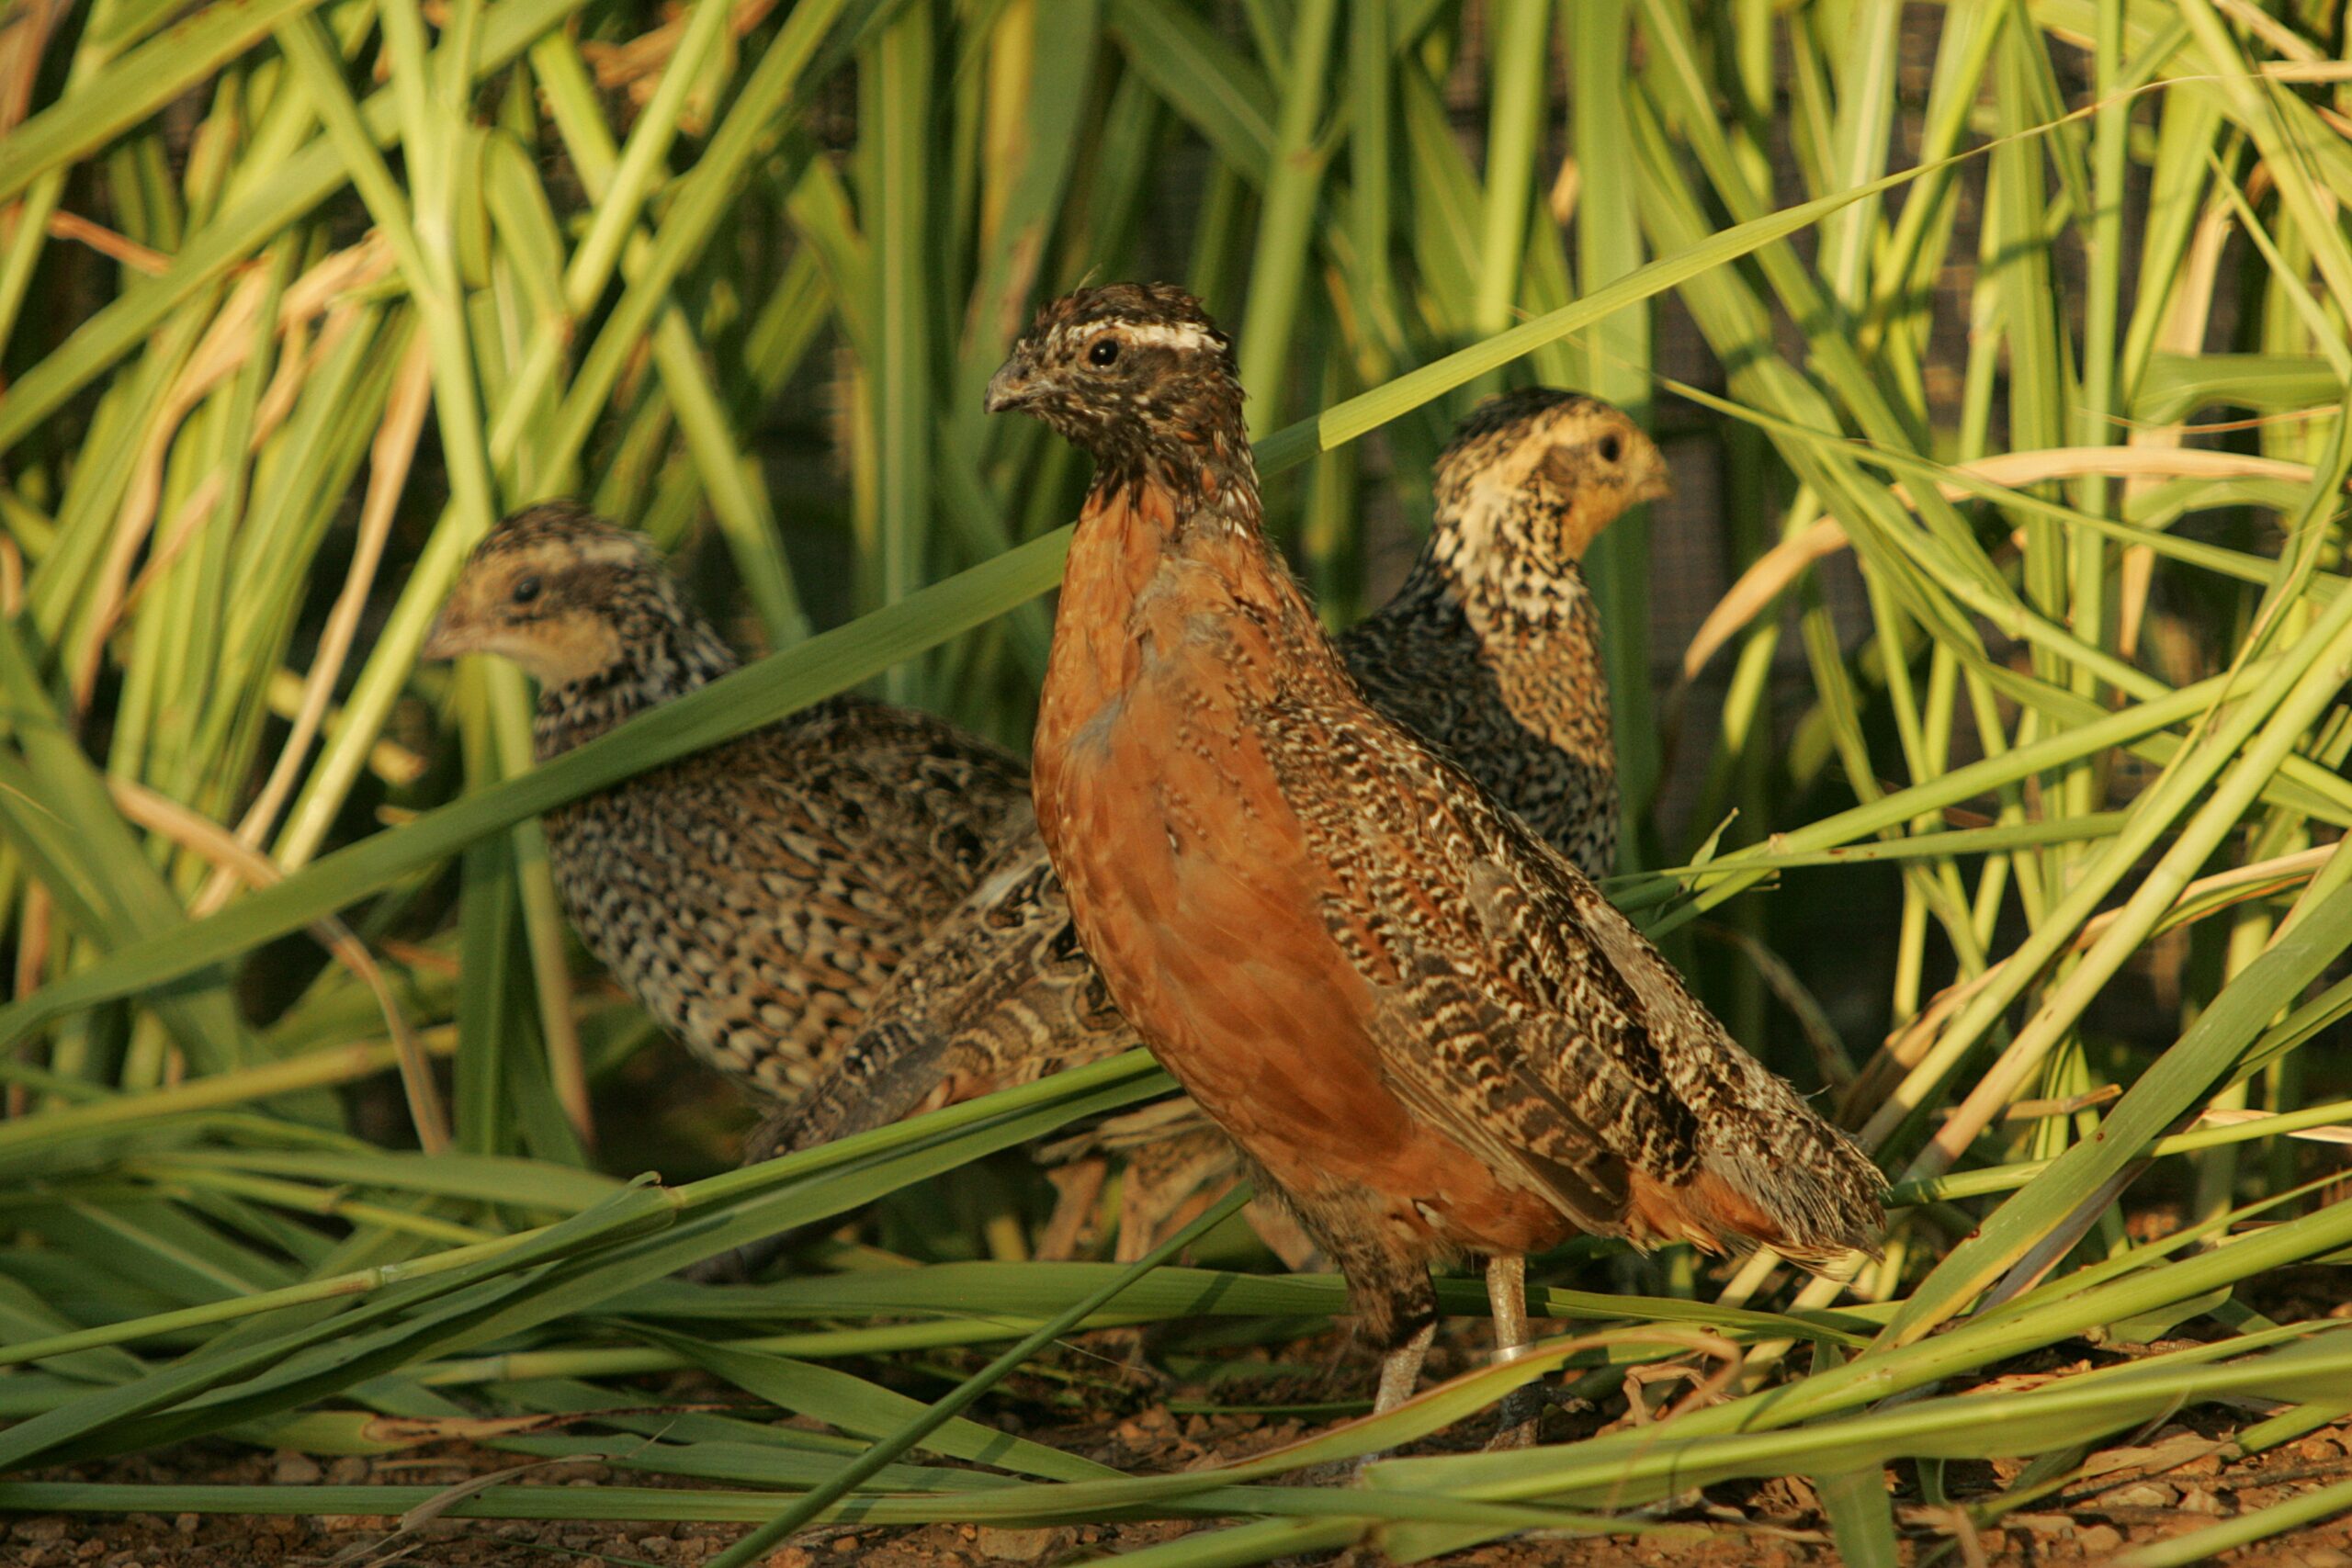 Three bobwhite quail in some tall grass.